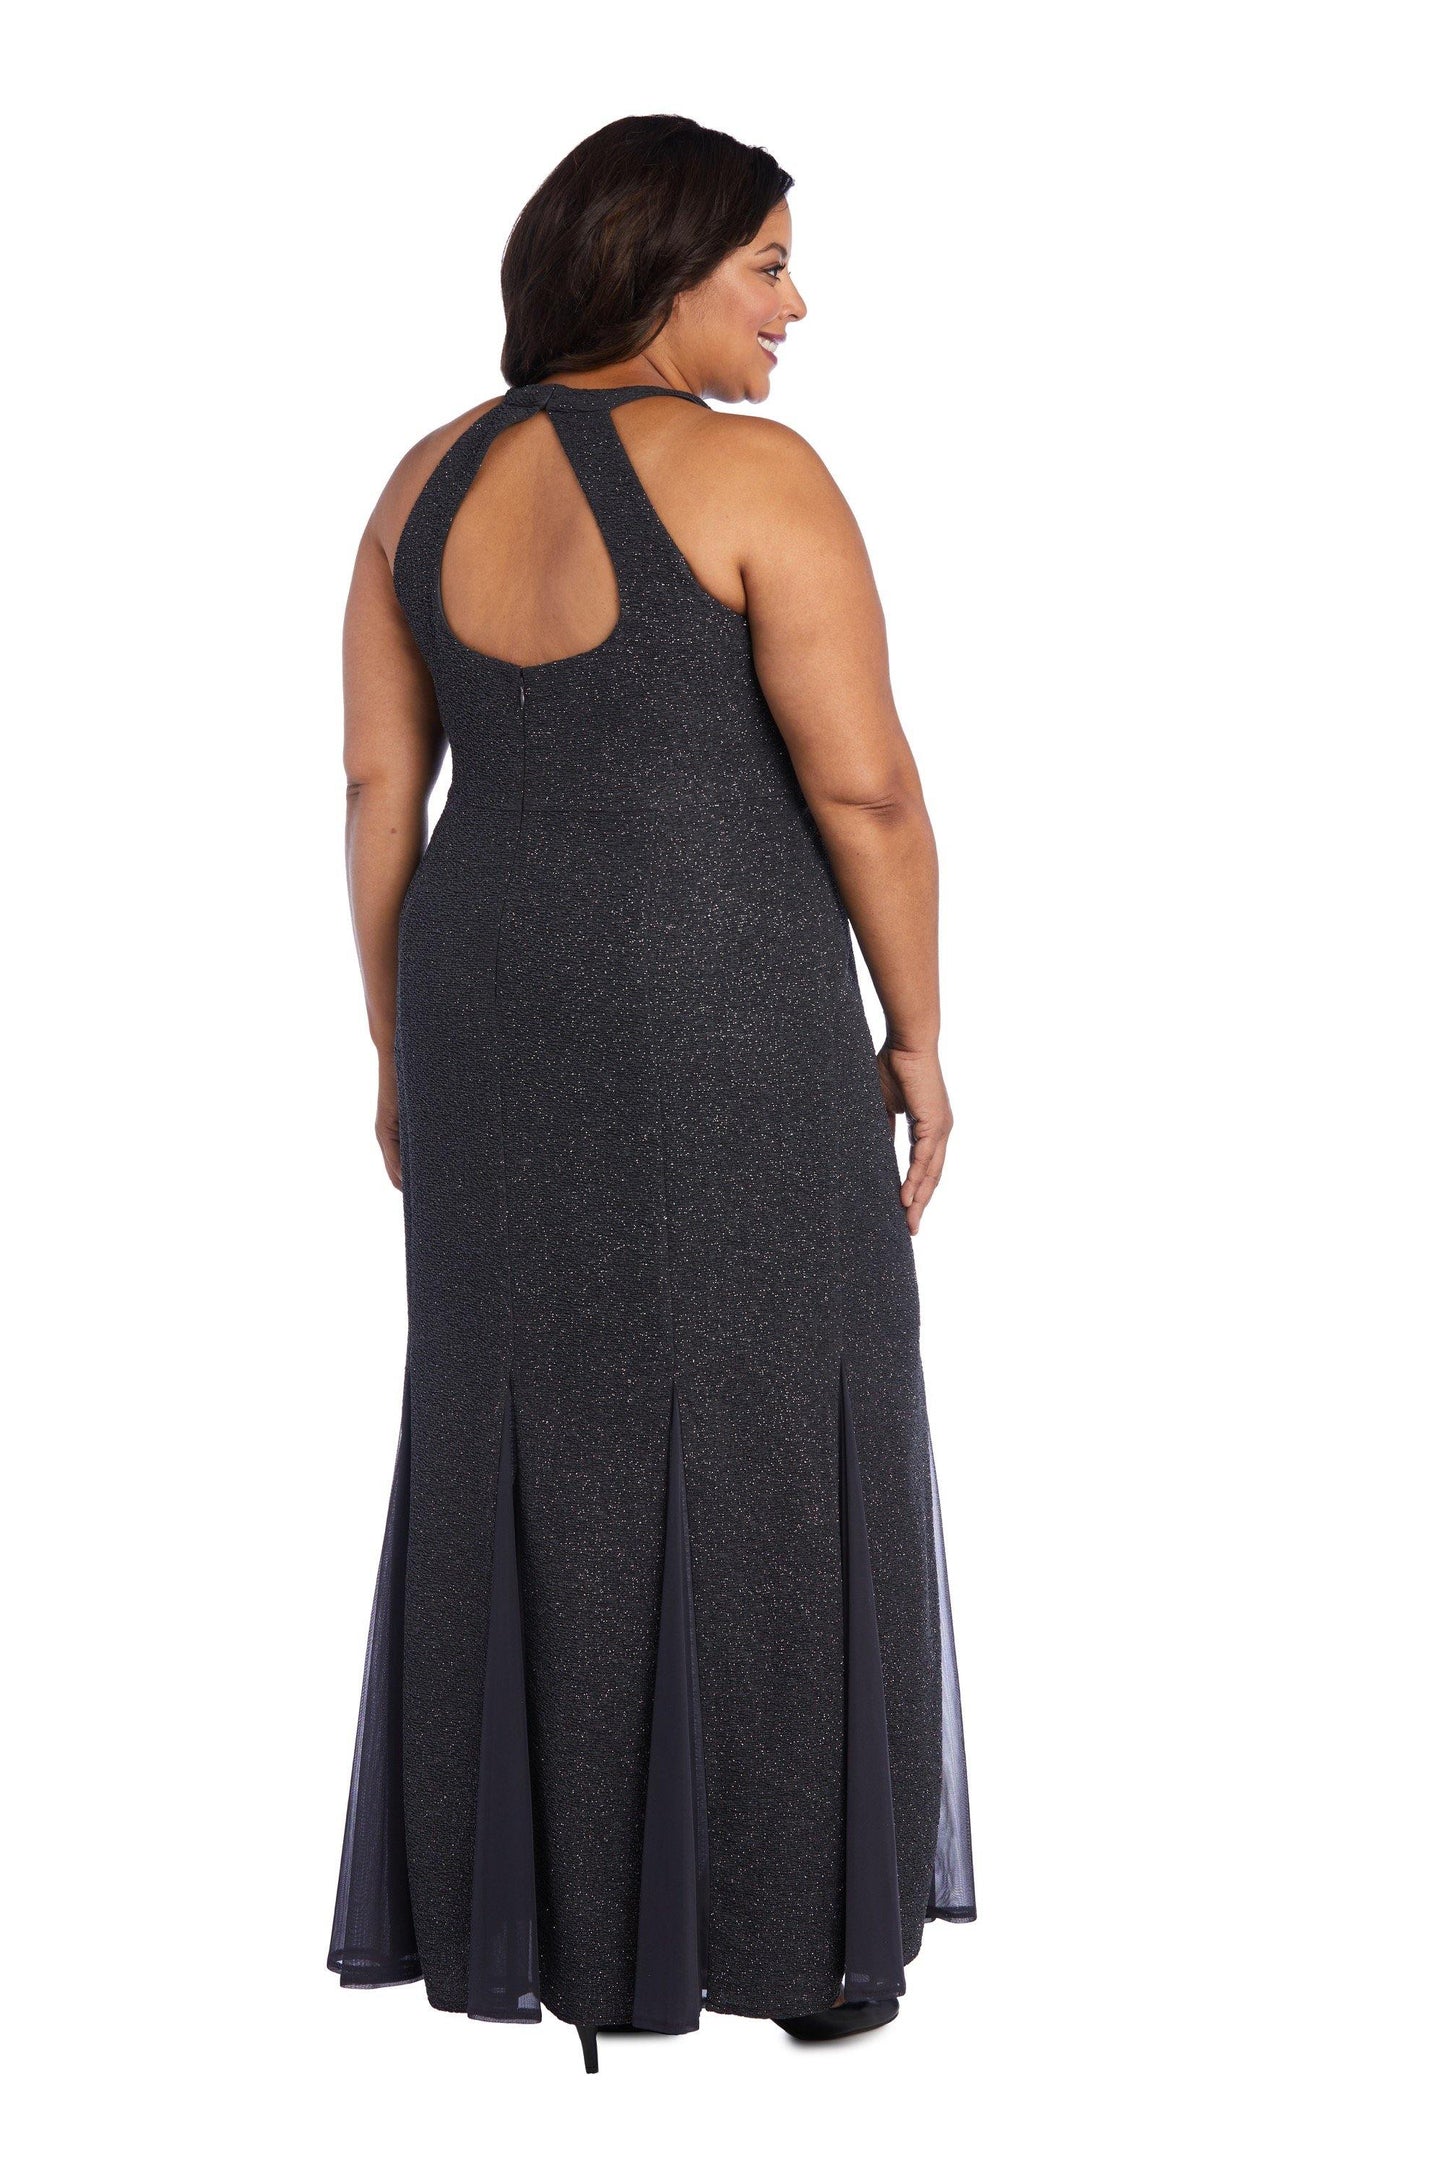 Nightway Long Plus Size Glitter Knit Dress 21555W - The Dress Outlet